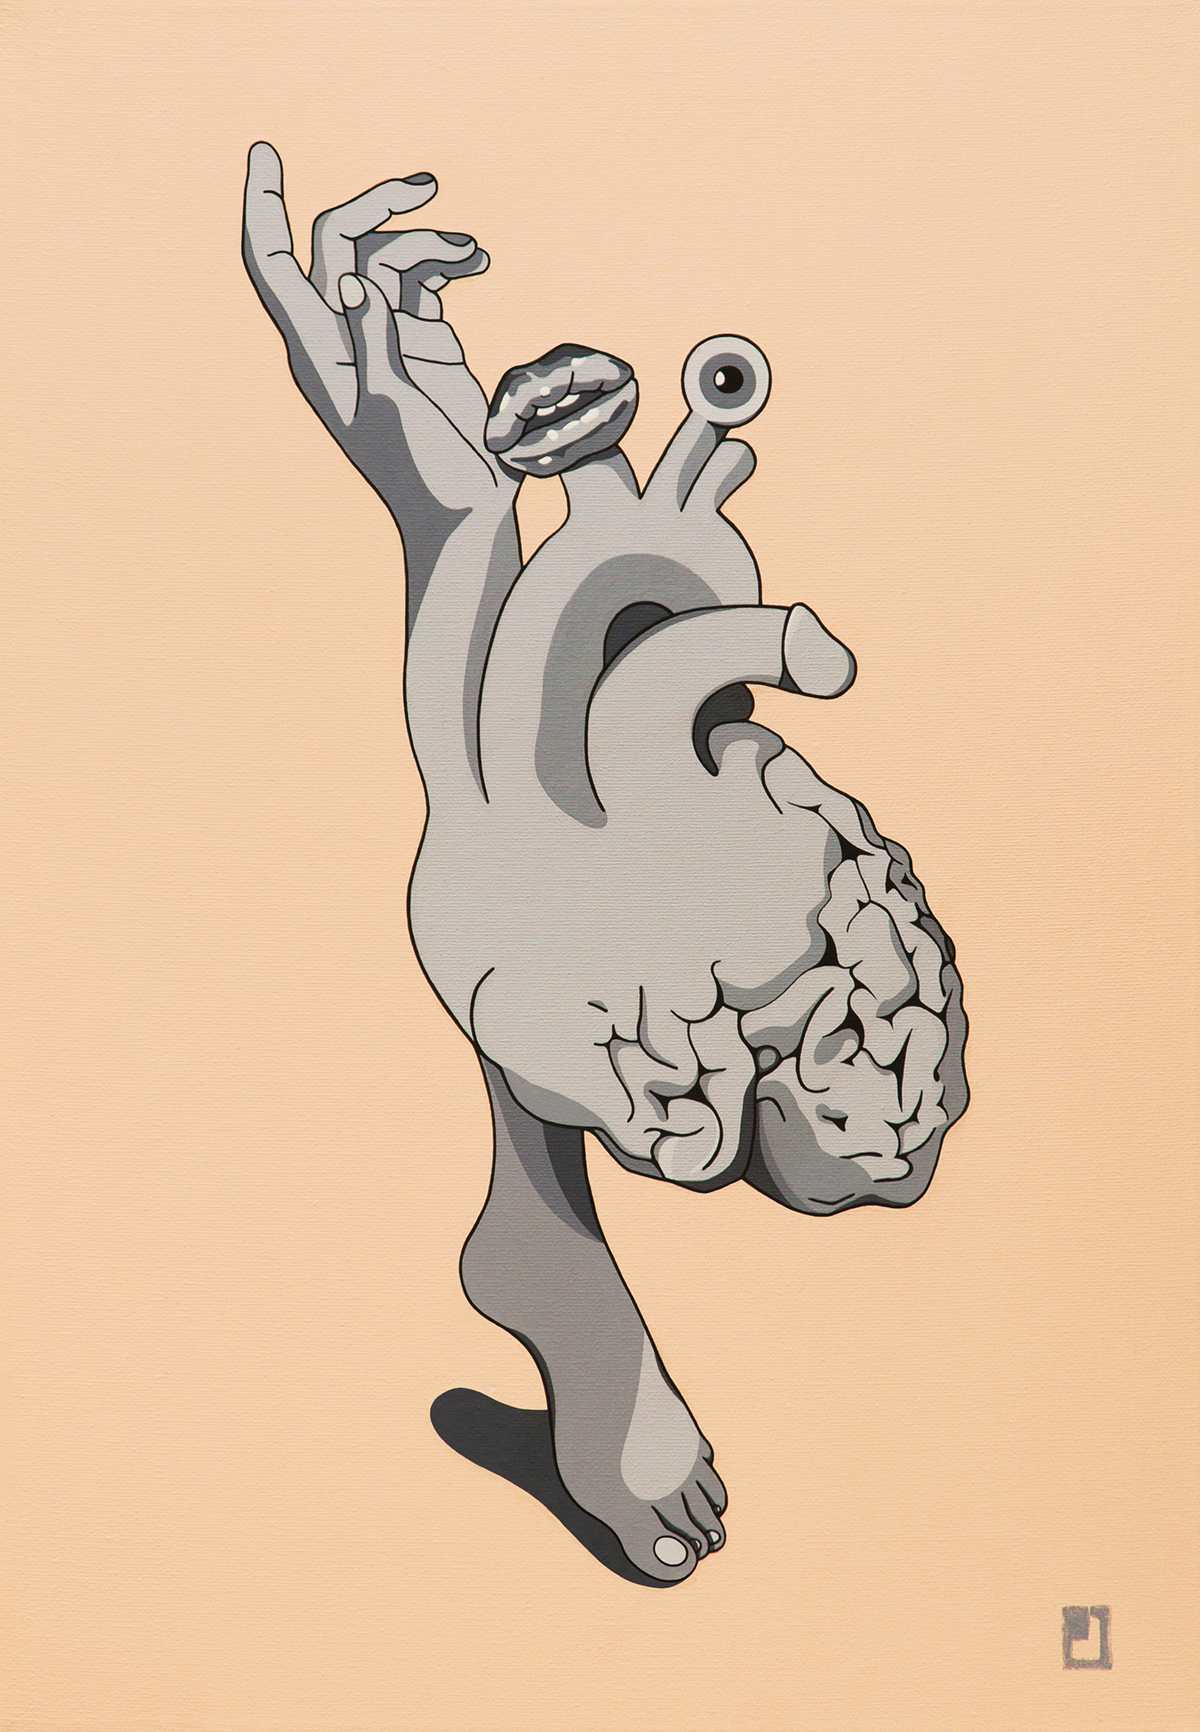 NEW WORK 2015 "The human body" acrylic on canvas 50x30 cm